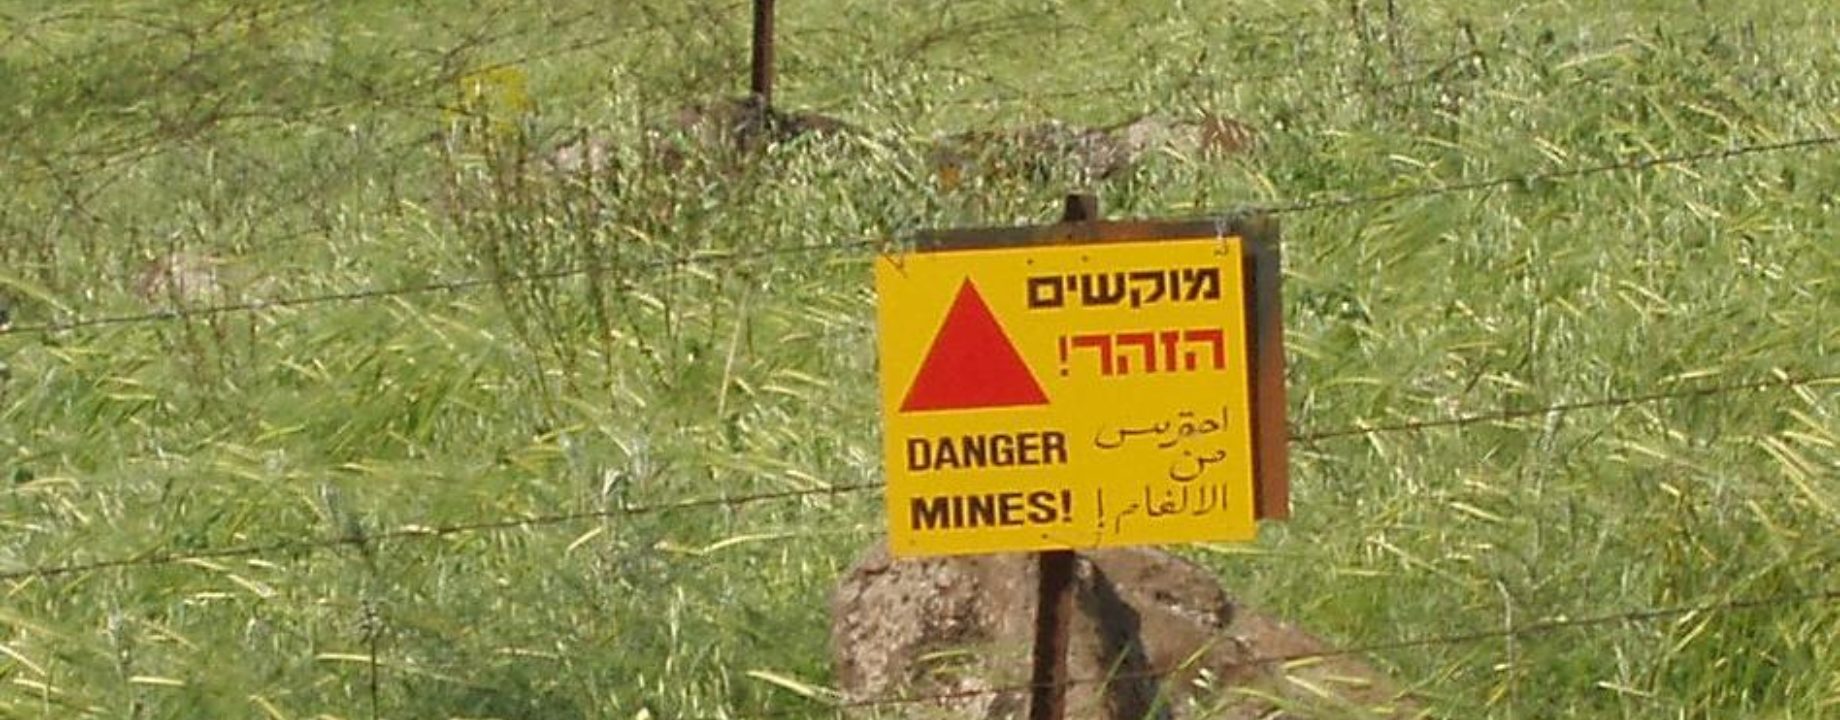 Minefield warning